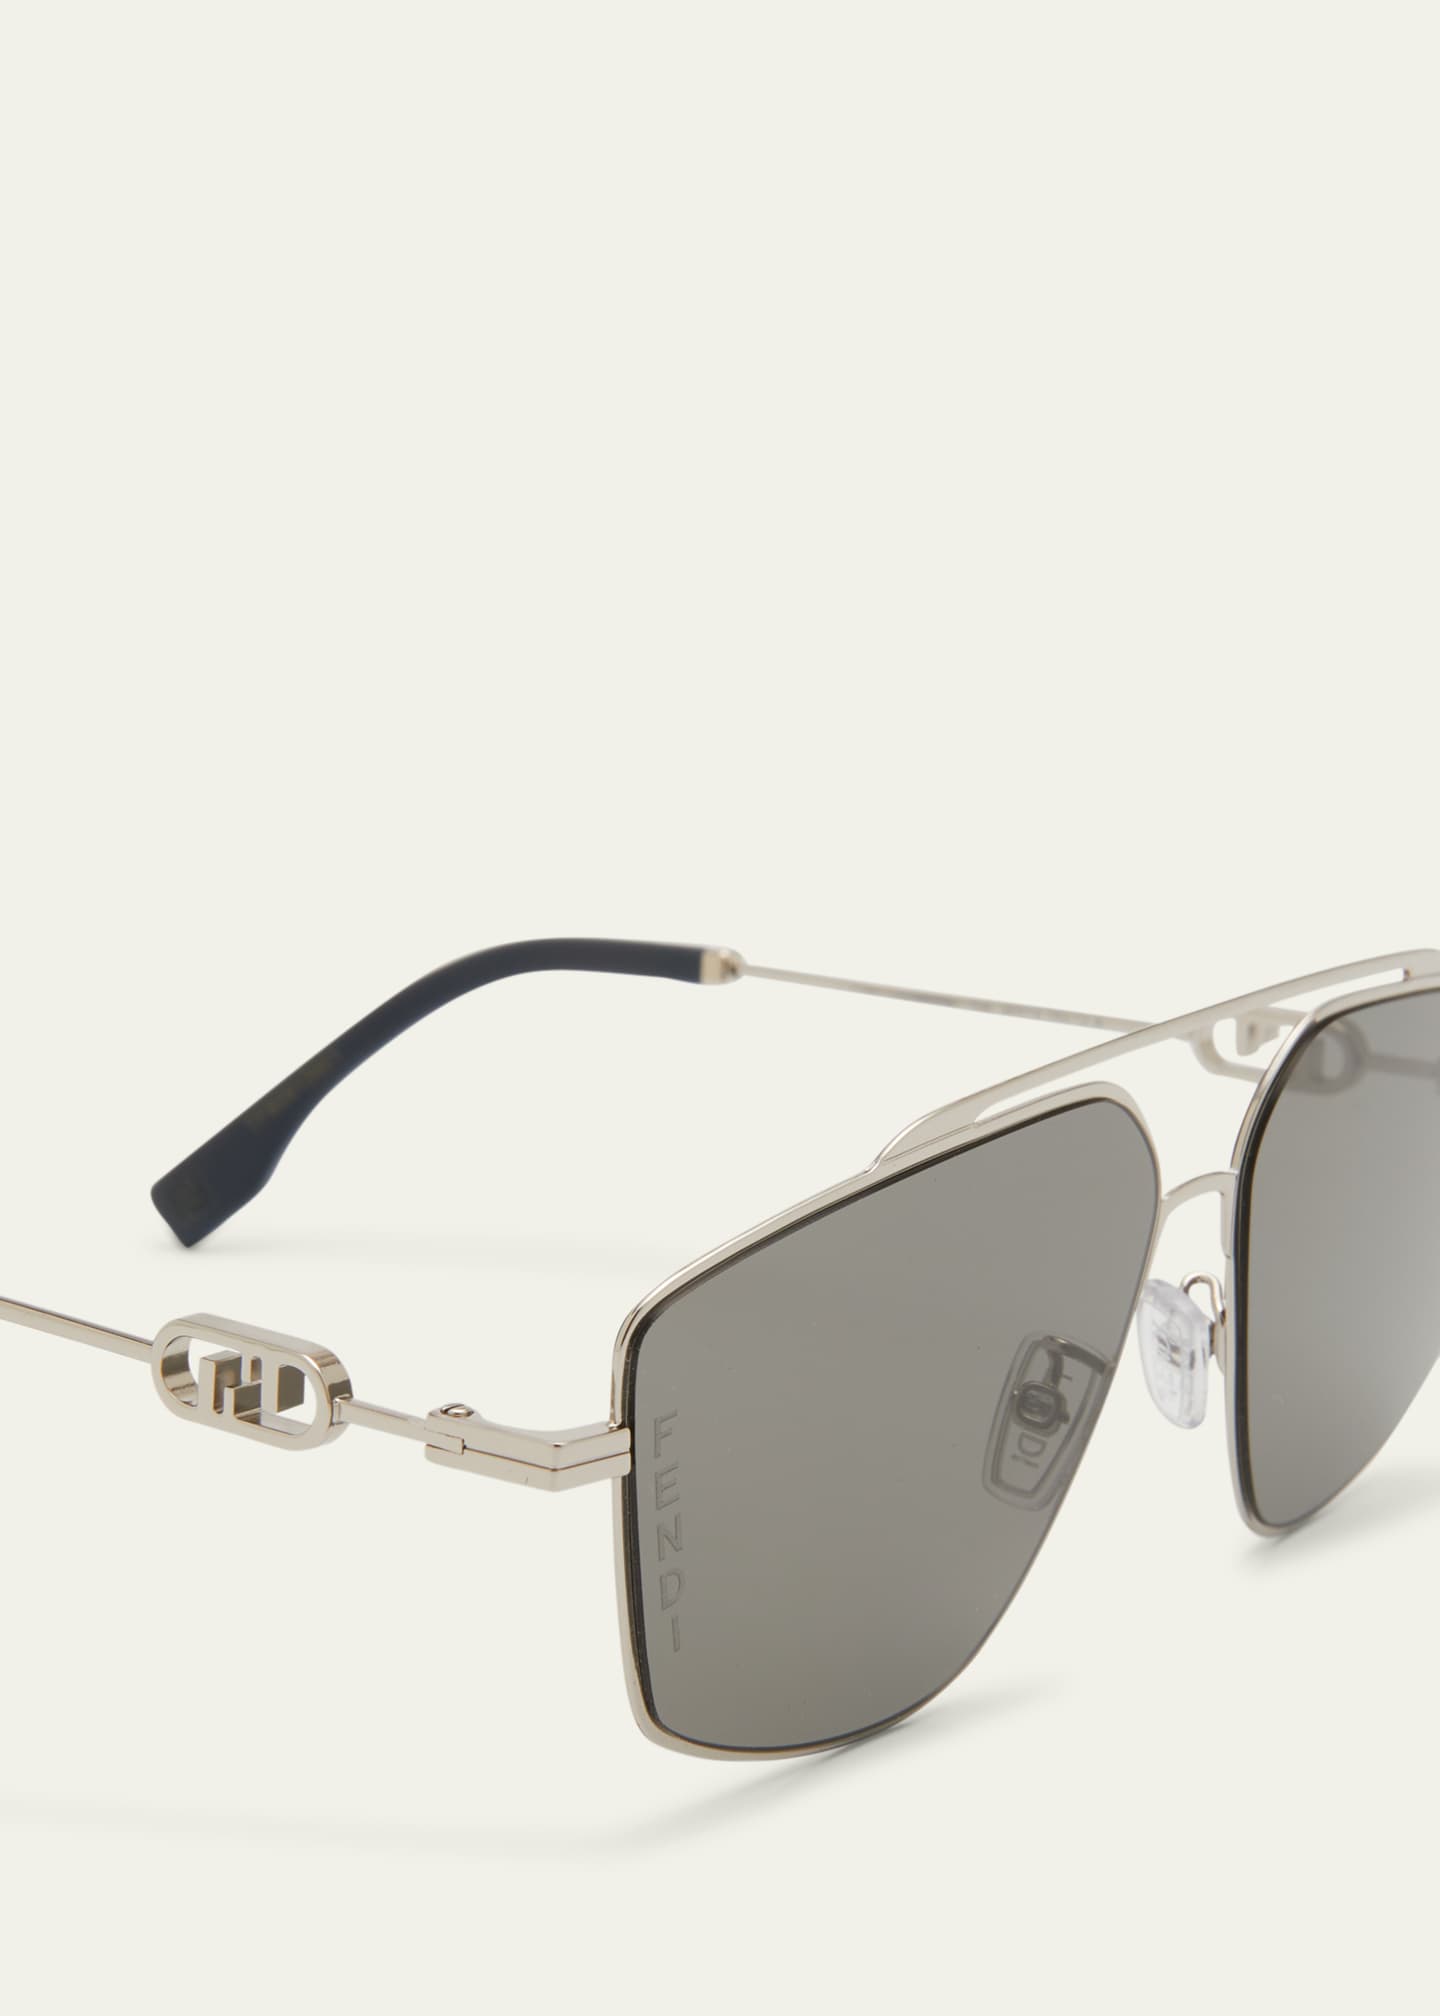 Fendi Men's Aviator-Style Sunglasses